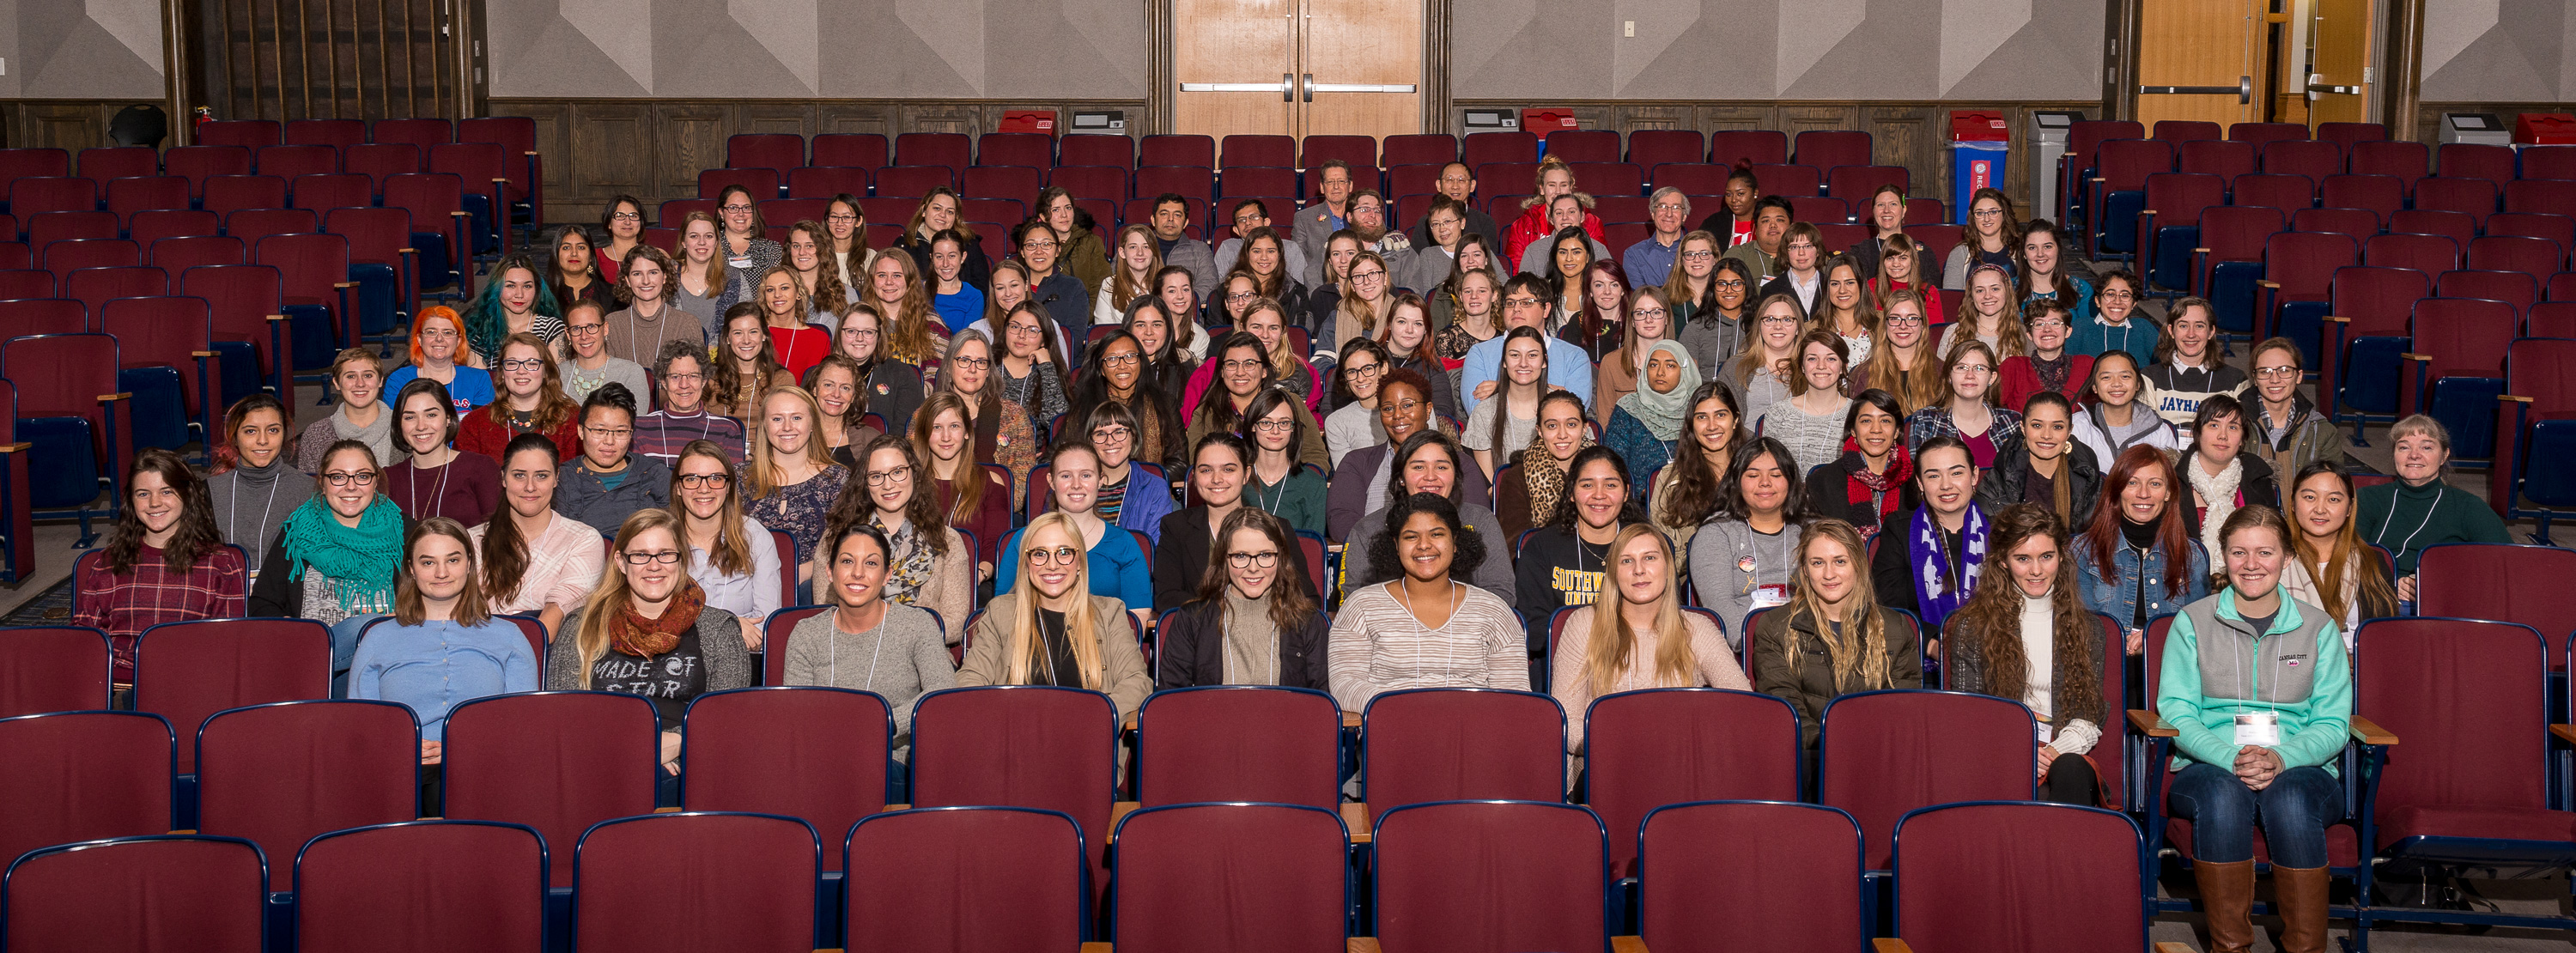 Participants of CUWiP 2018 at University of Kansas